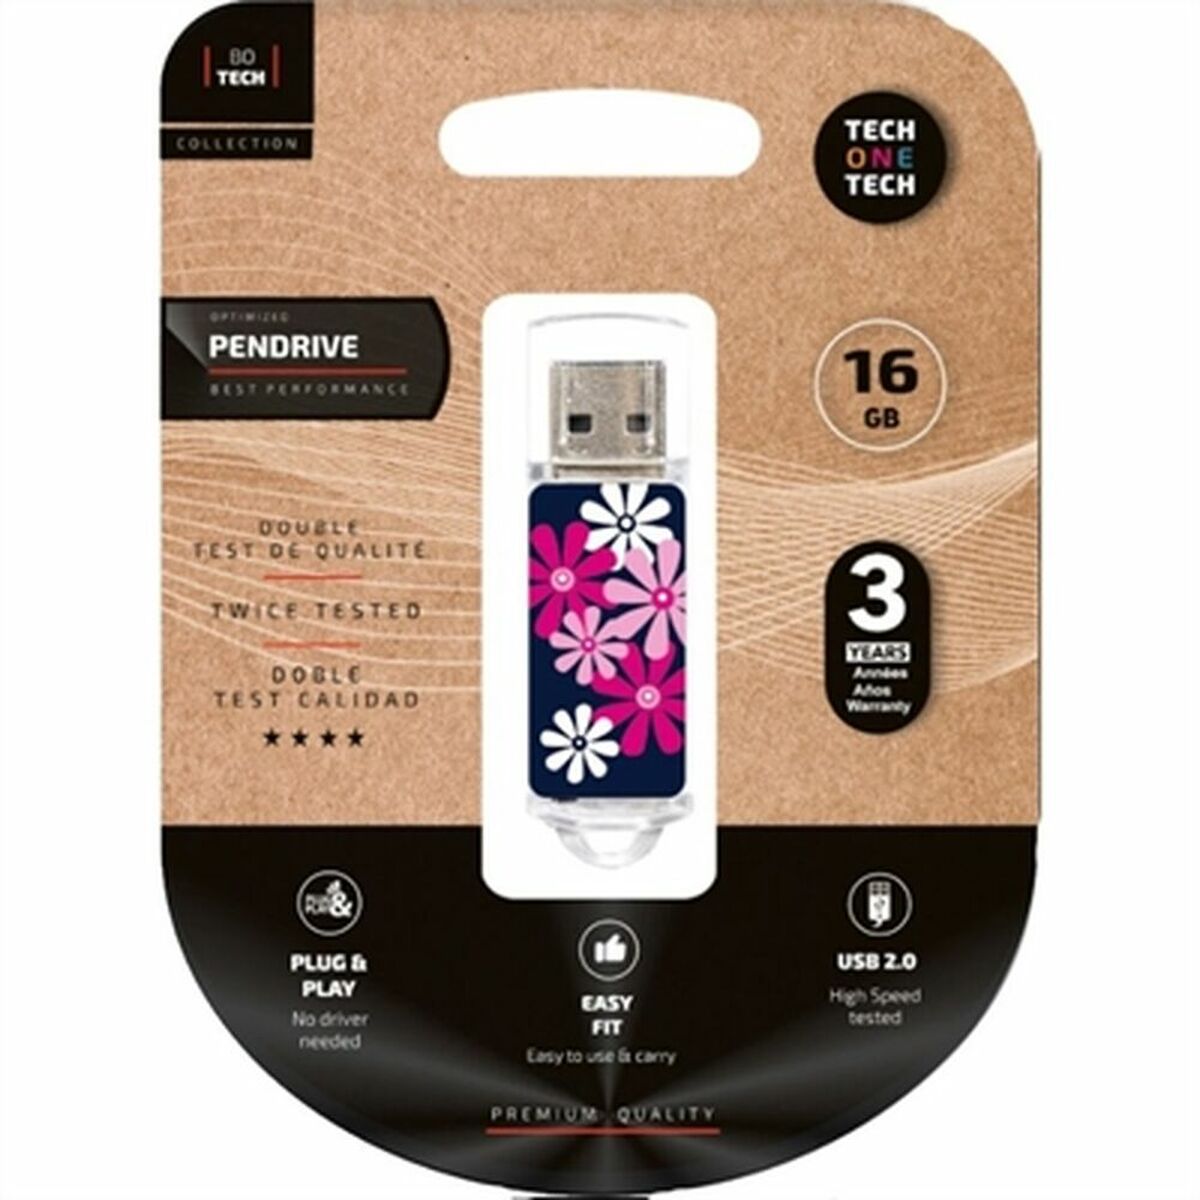 Clé USB Tech One Tech TEC4017-16 16 GB